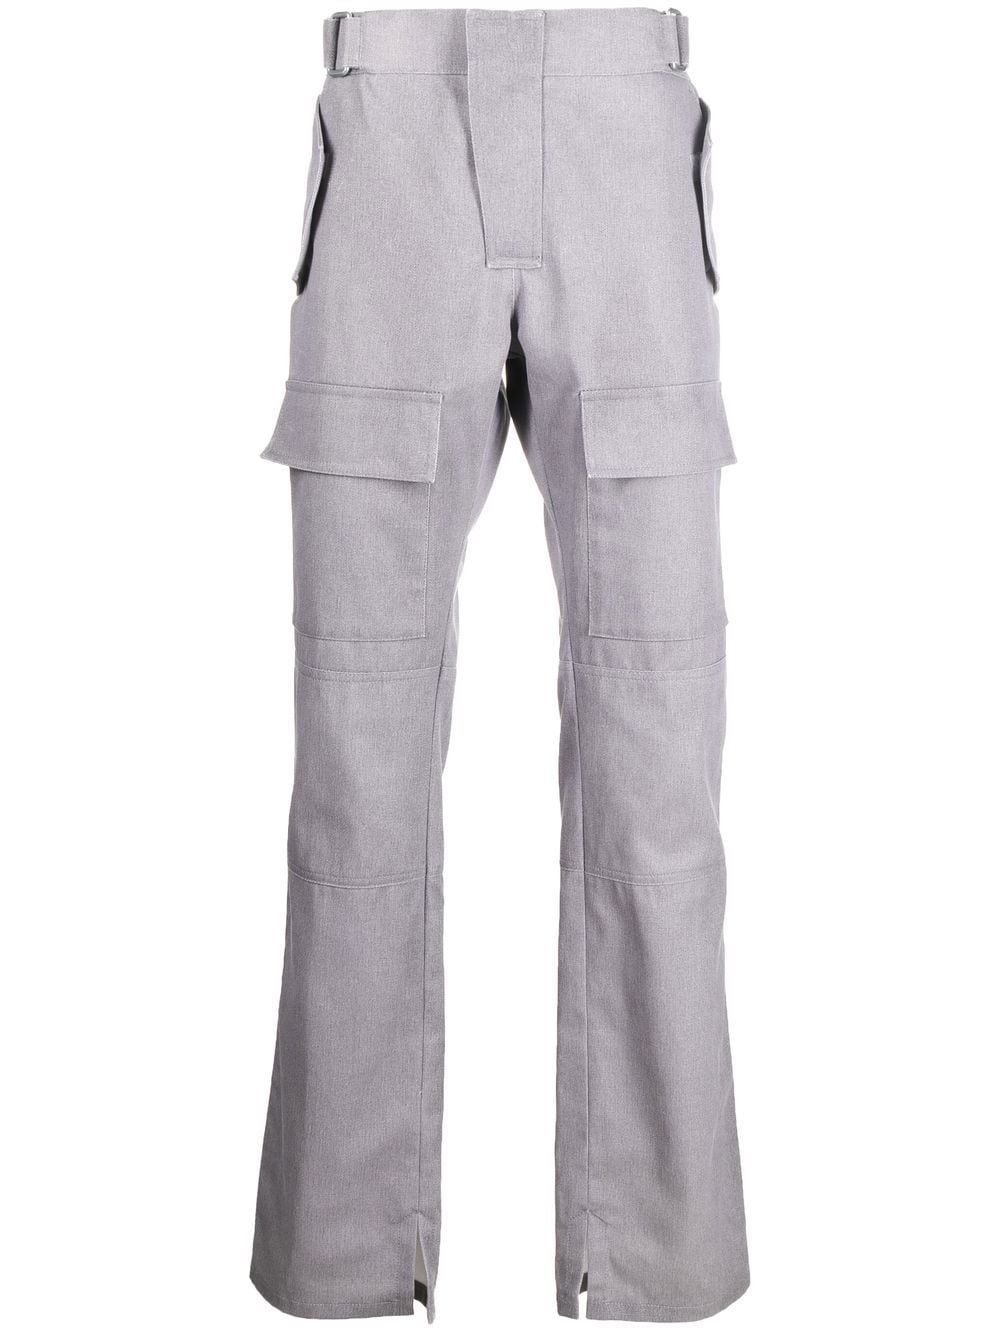 heat-reflective cargo trousers - 1